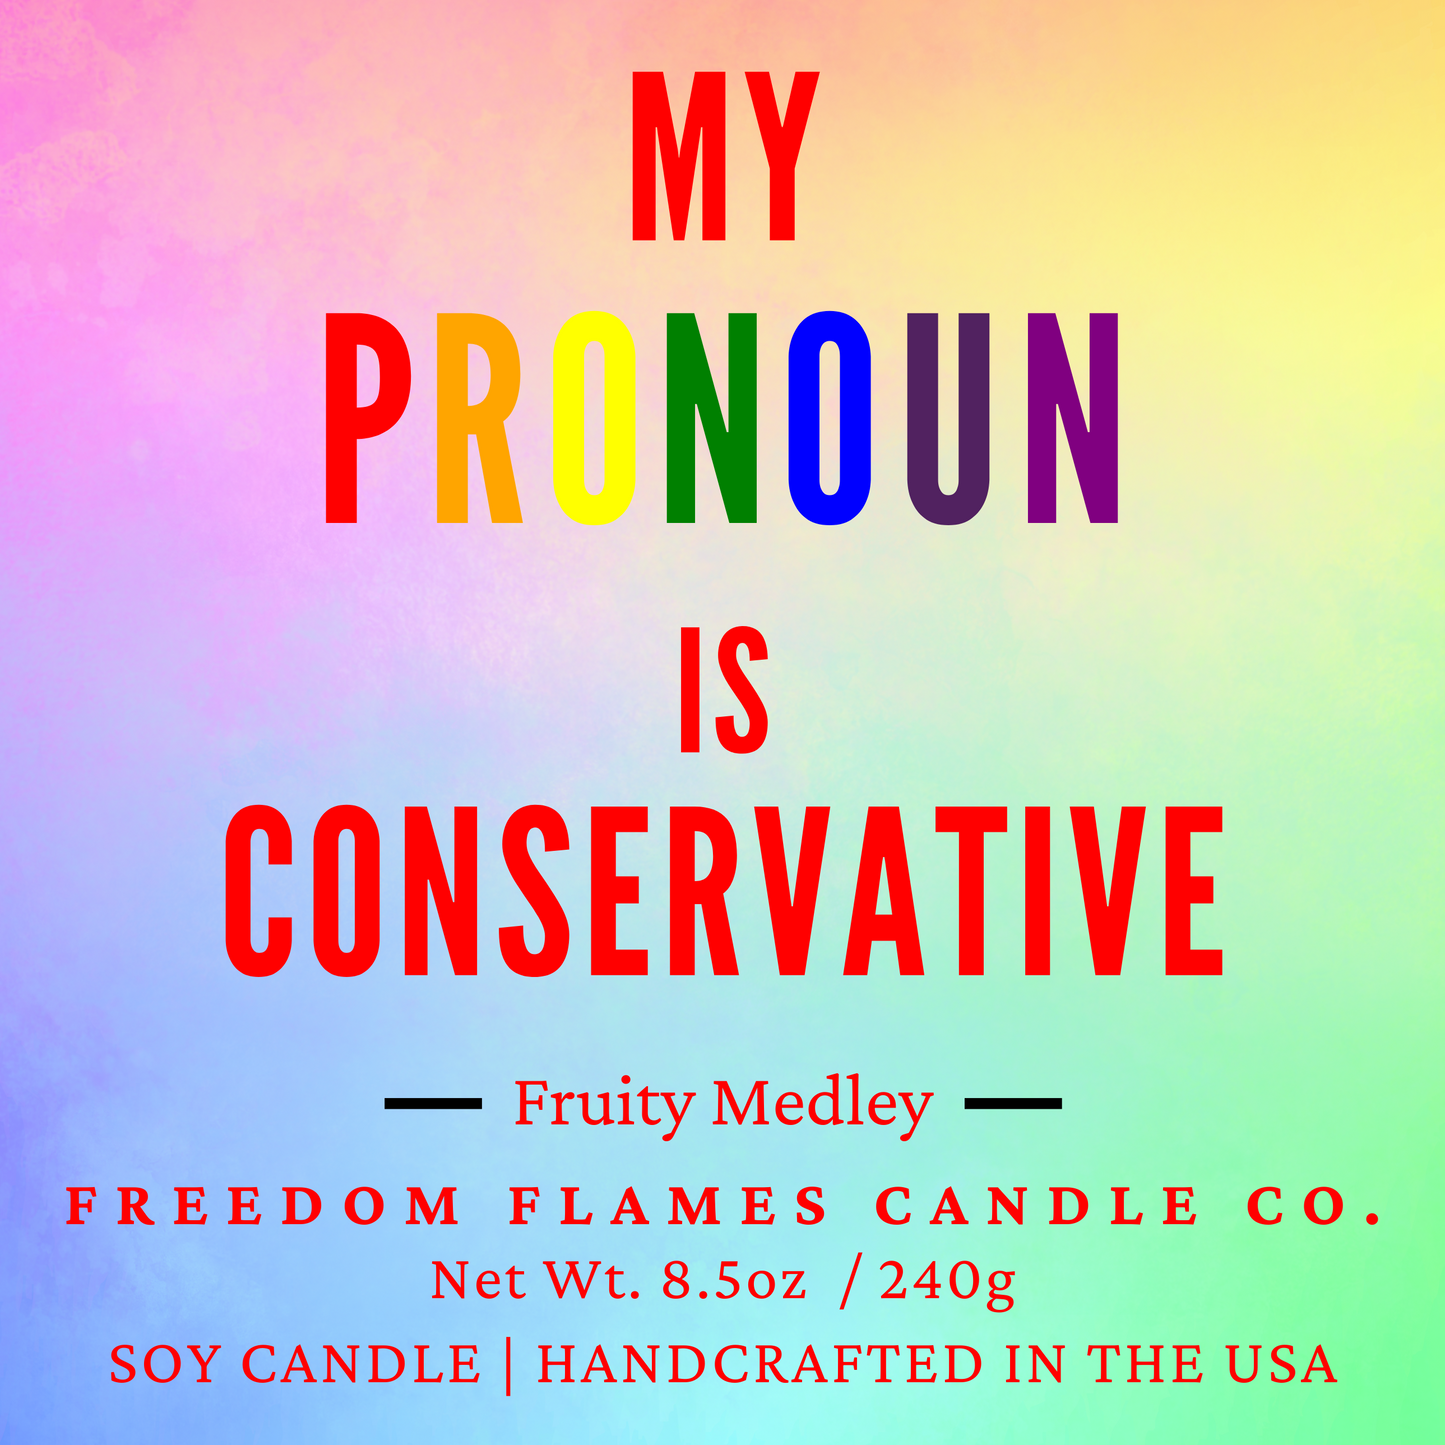 My Pronoun is Conservative (Fruity Medley)